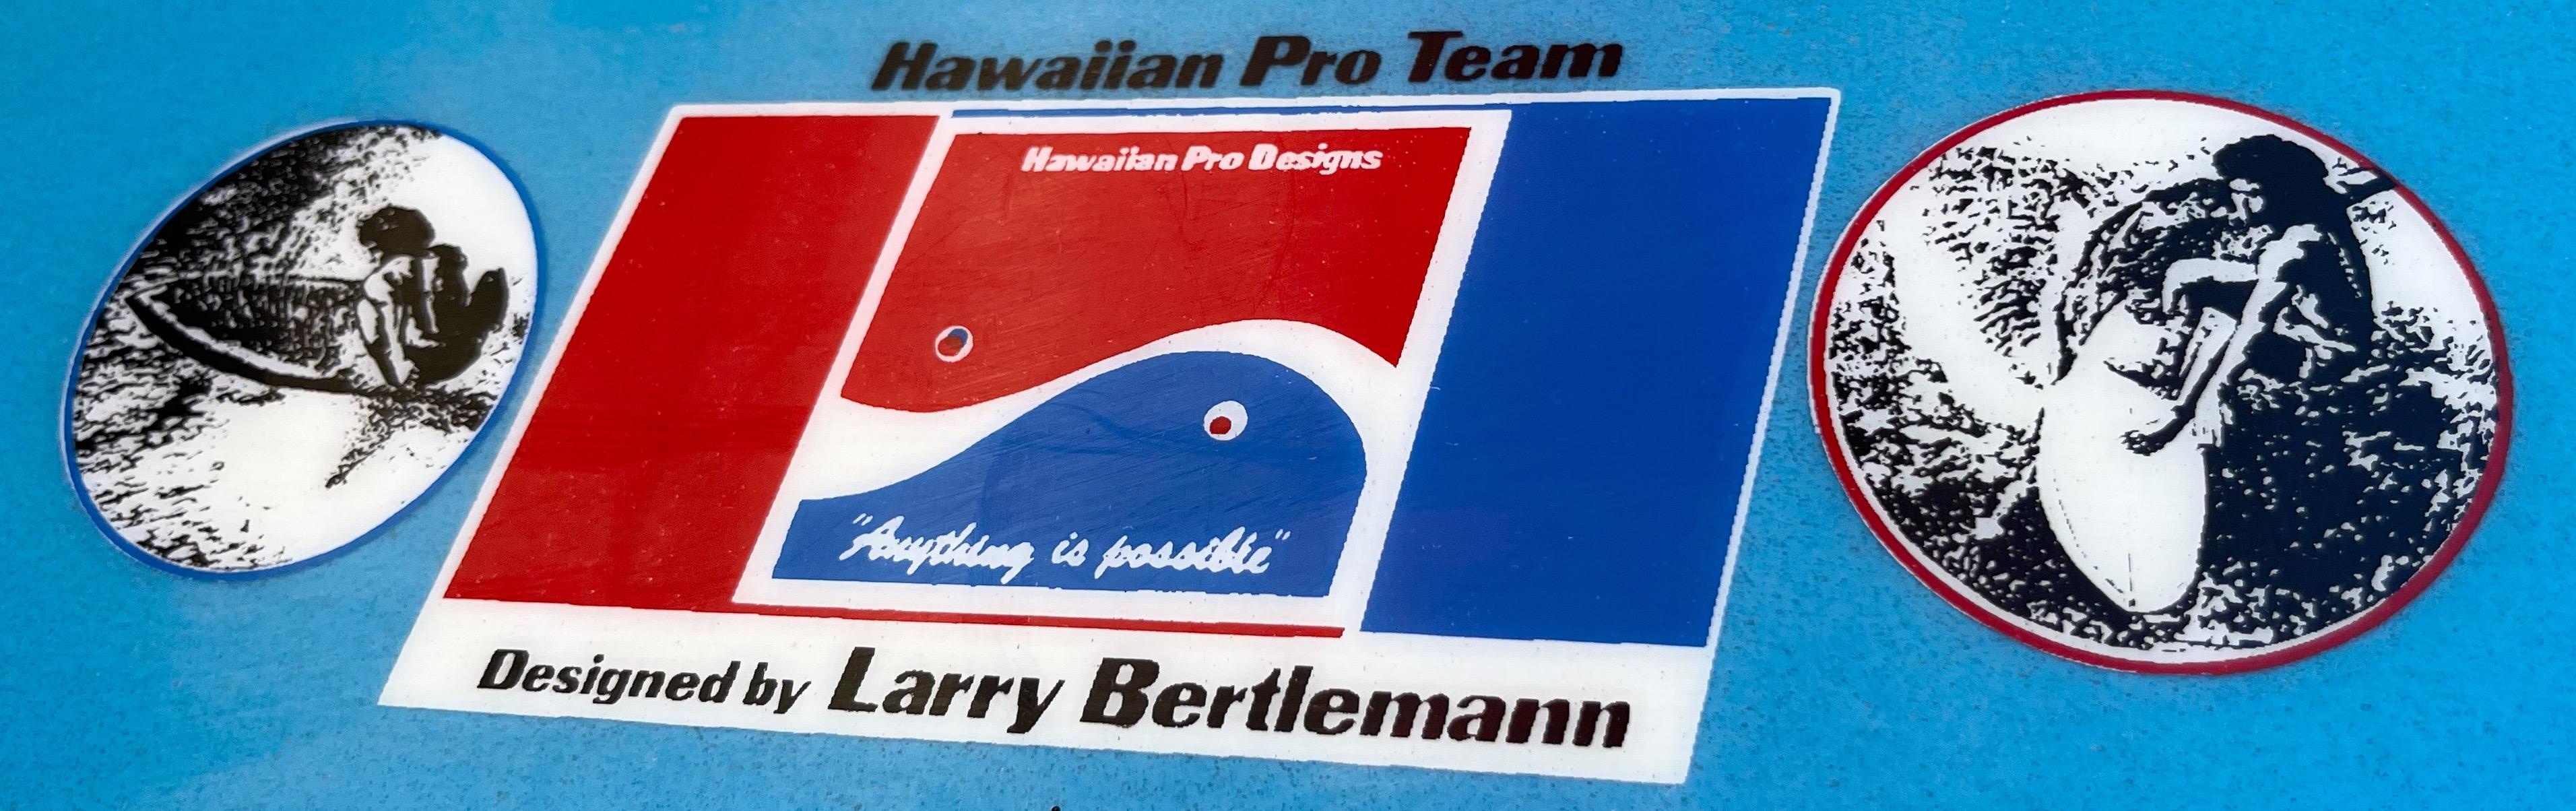 Contemporary Larry Bertlemann Twin-Fin Surfboard by Donald Takayama